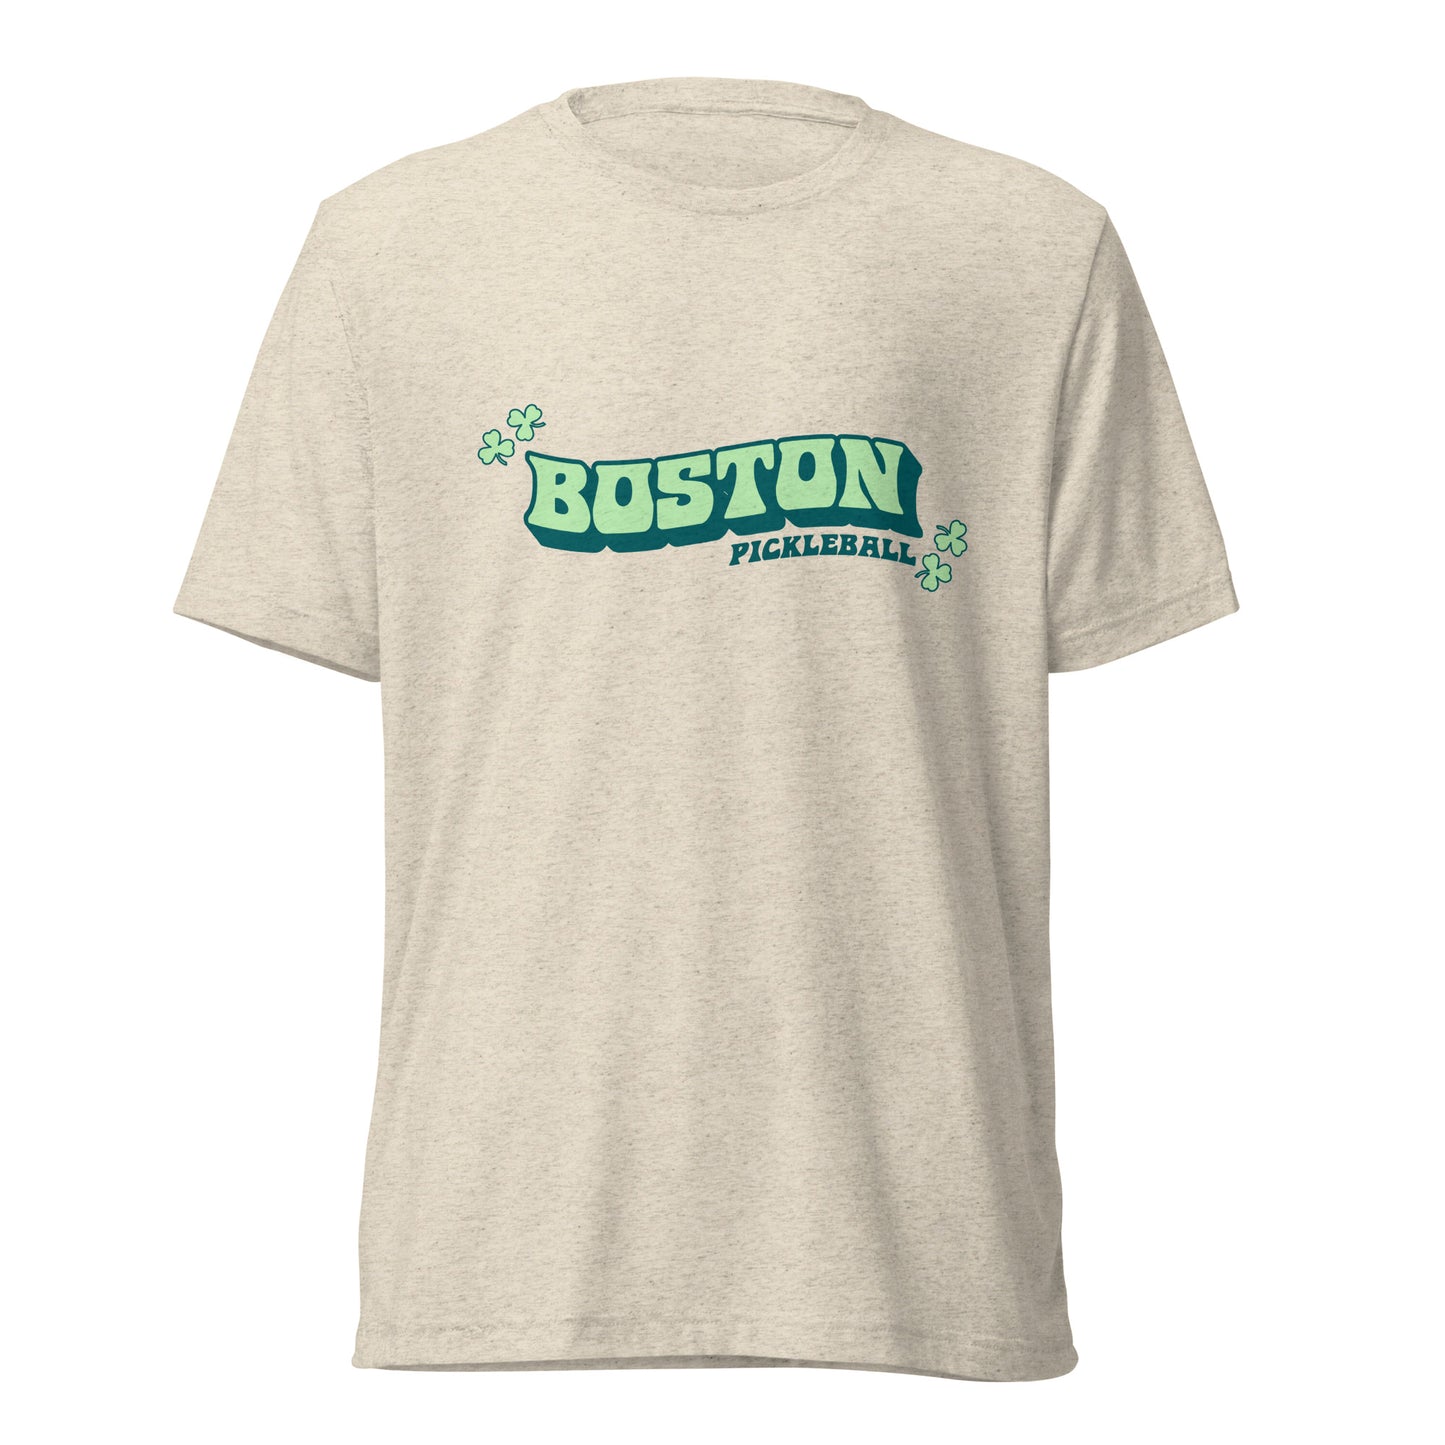 BOSTON PICKLEBALL